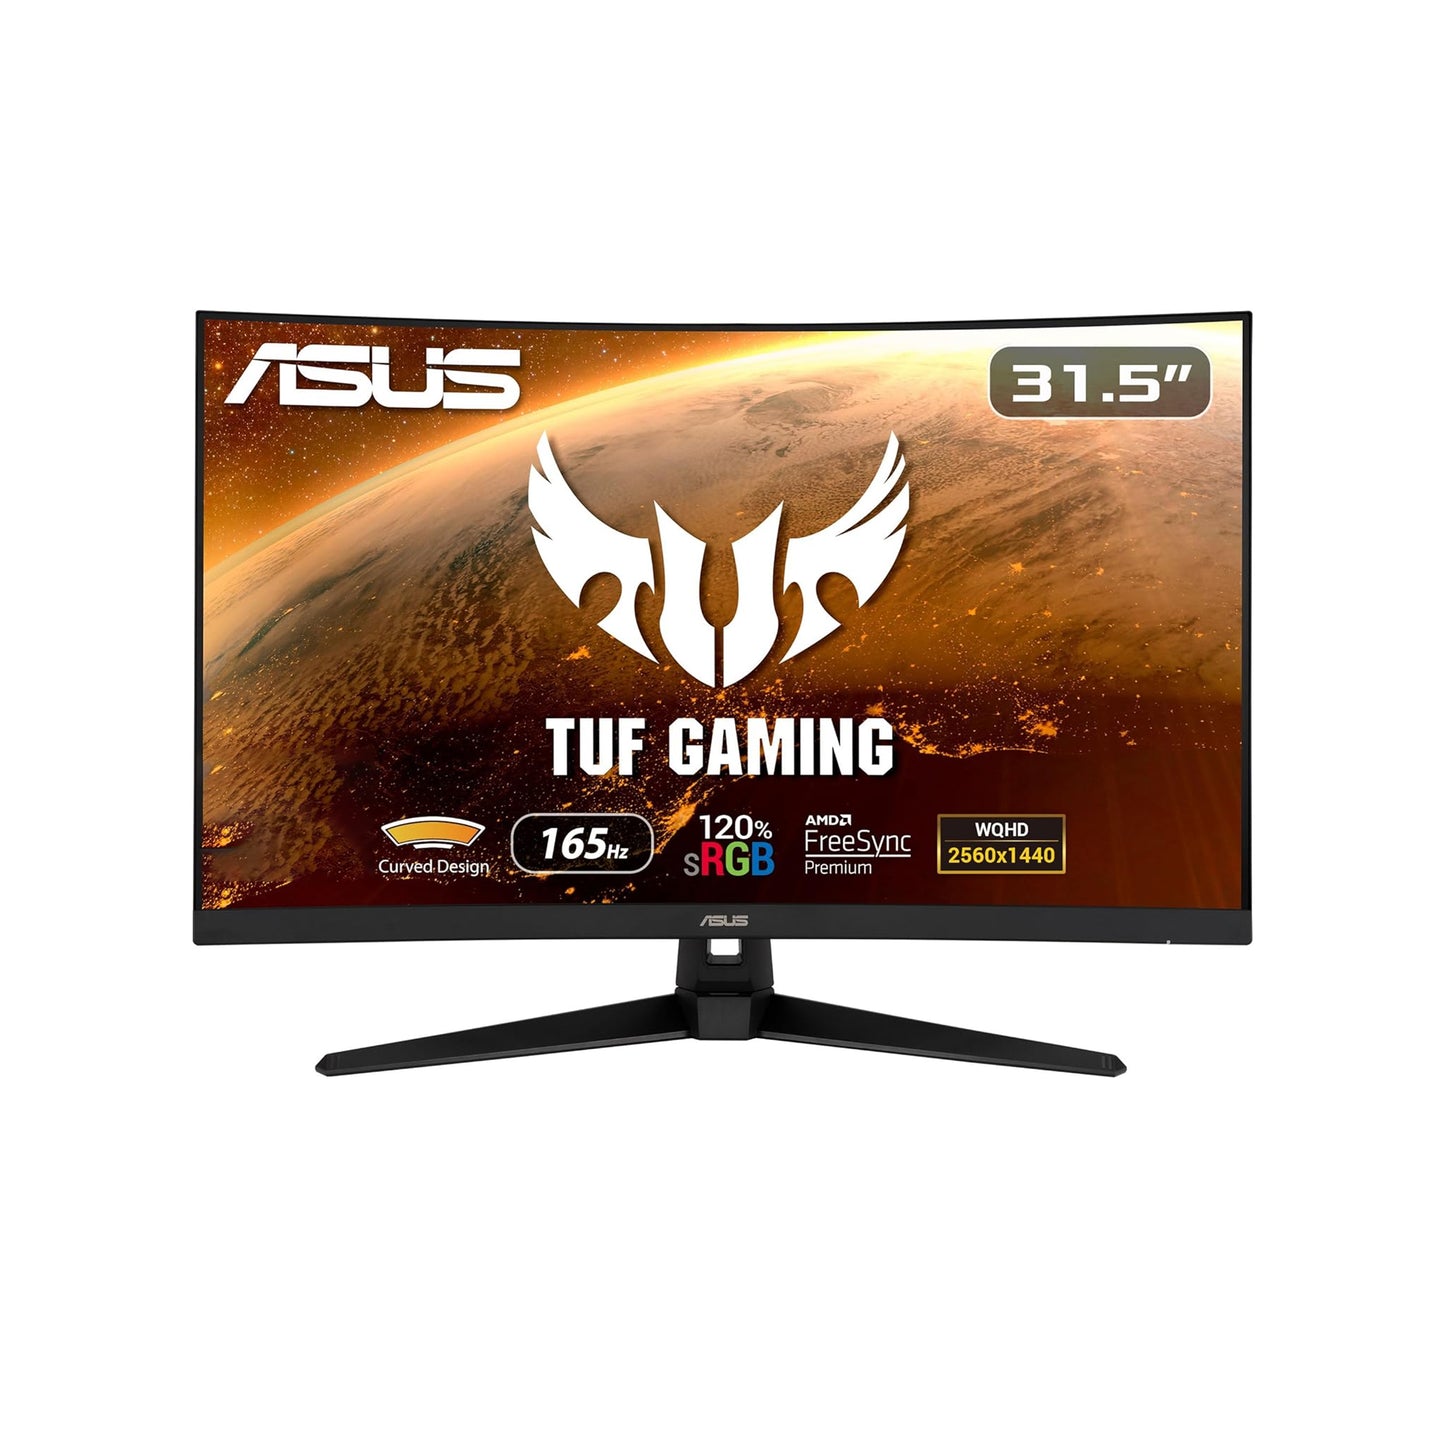 ASUS TUF Gaming 32" 1440P HDR Curved Monitor (VG32VQ1B) - QHD (2560 x 1440), 165Hz (Supports 144Hz), 1ms, Extreme Low Motion Blur, Speaker, FreeSync Premium, VESA Mountable, DisplayPort, HDMI,BLACK